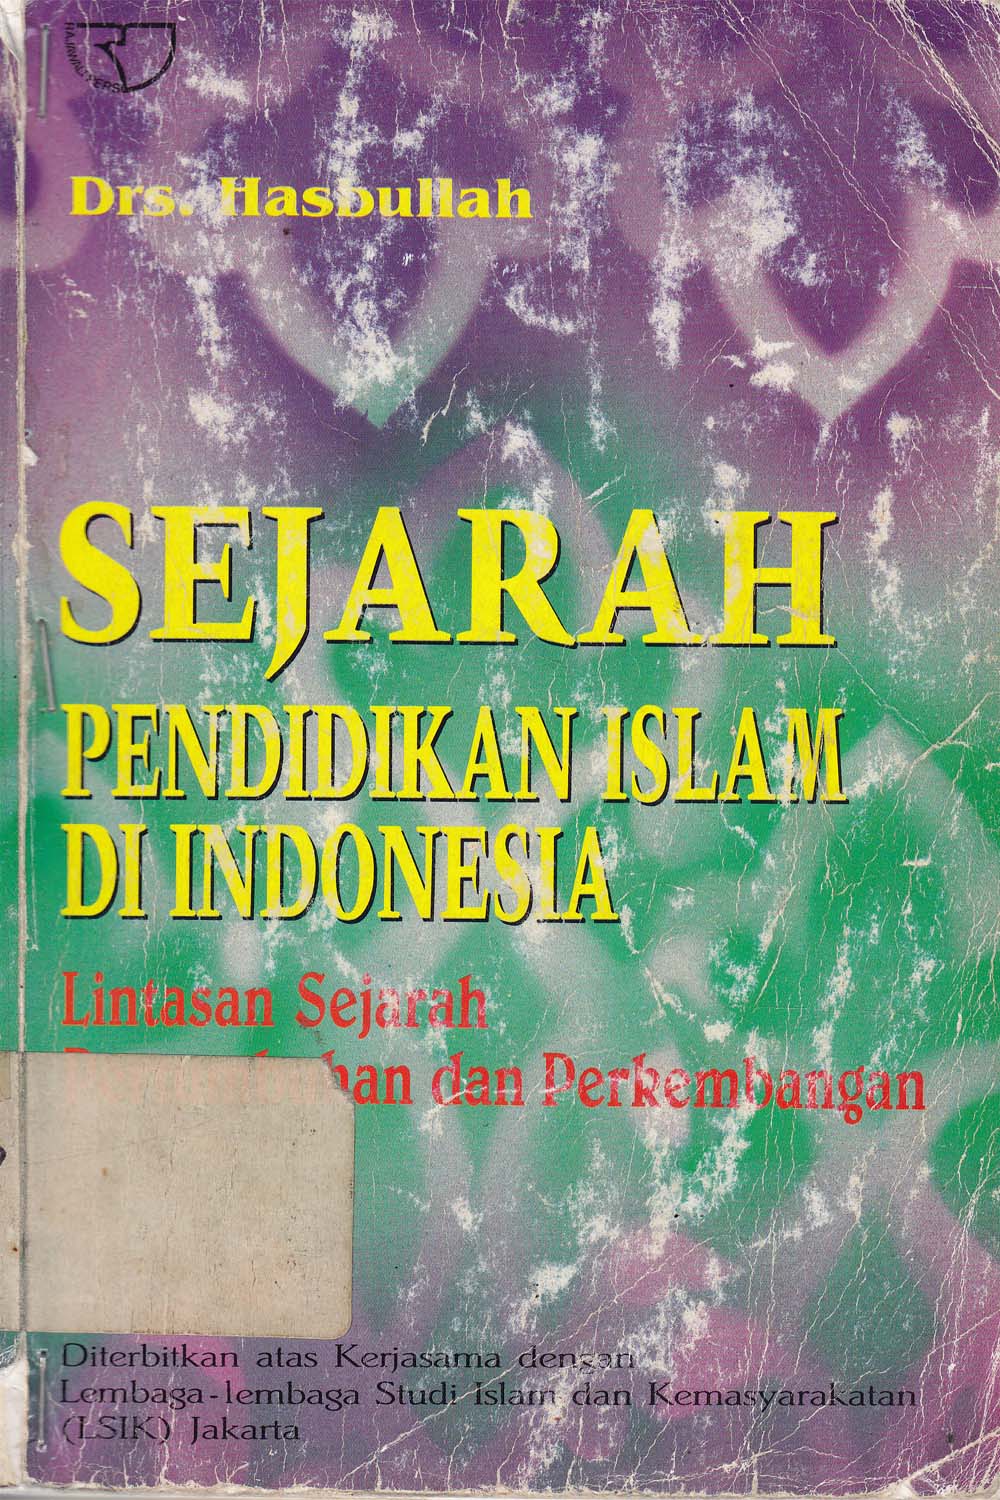 Sejarah pendidikan Islam di Indonesia: Lintasan sejarah pertumbuhan dan perkembangan